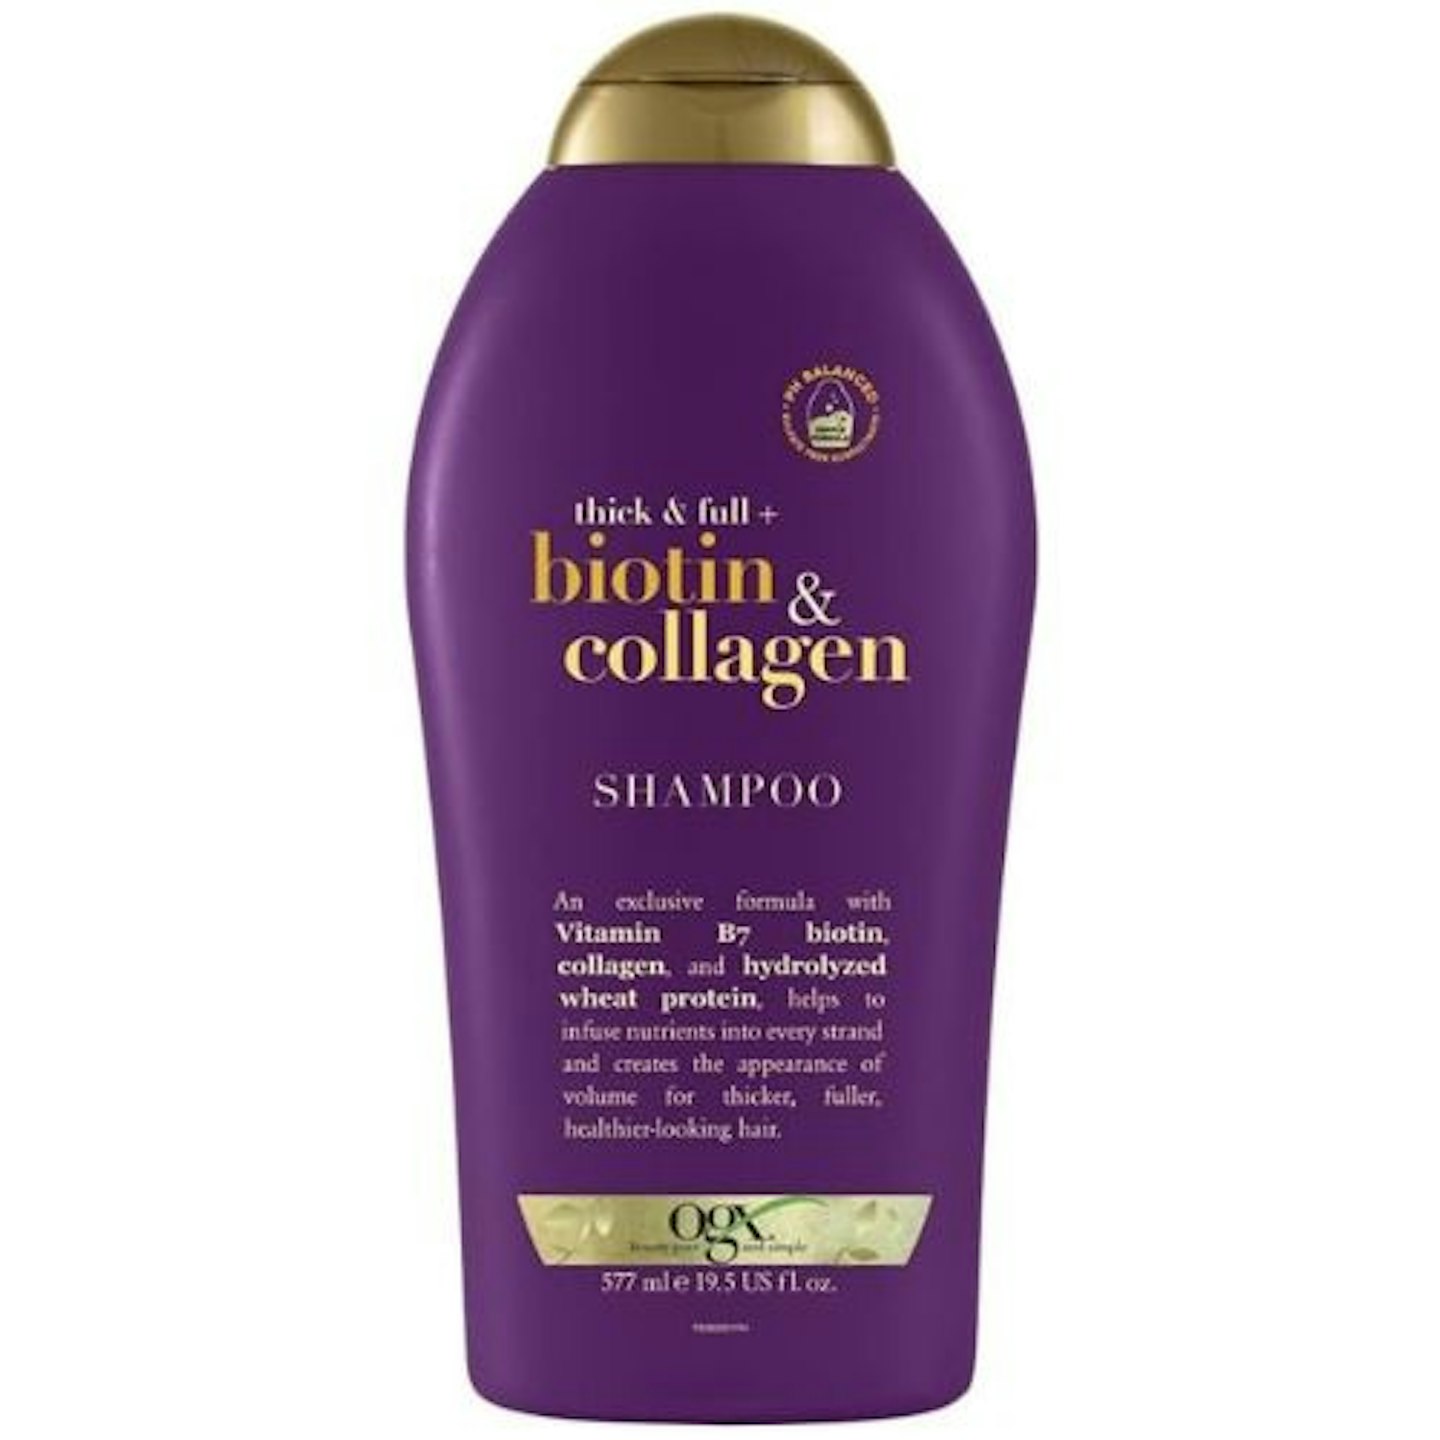 OGX Volumising Biotin & Collagen Sulfate Free Hair Shampoo